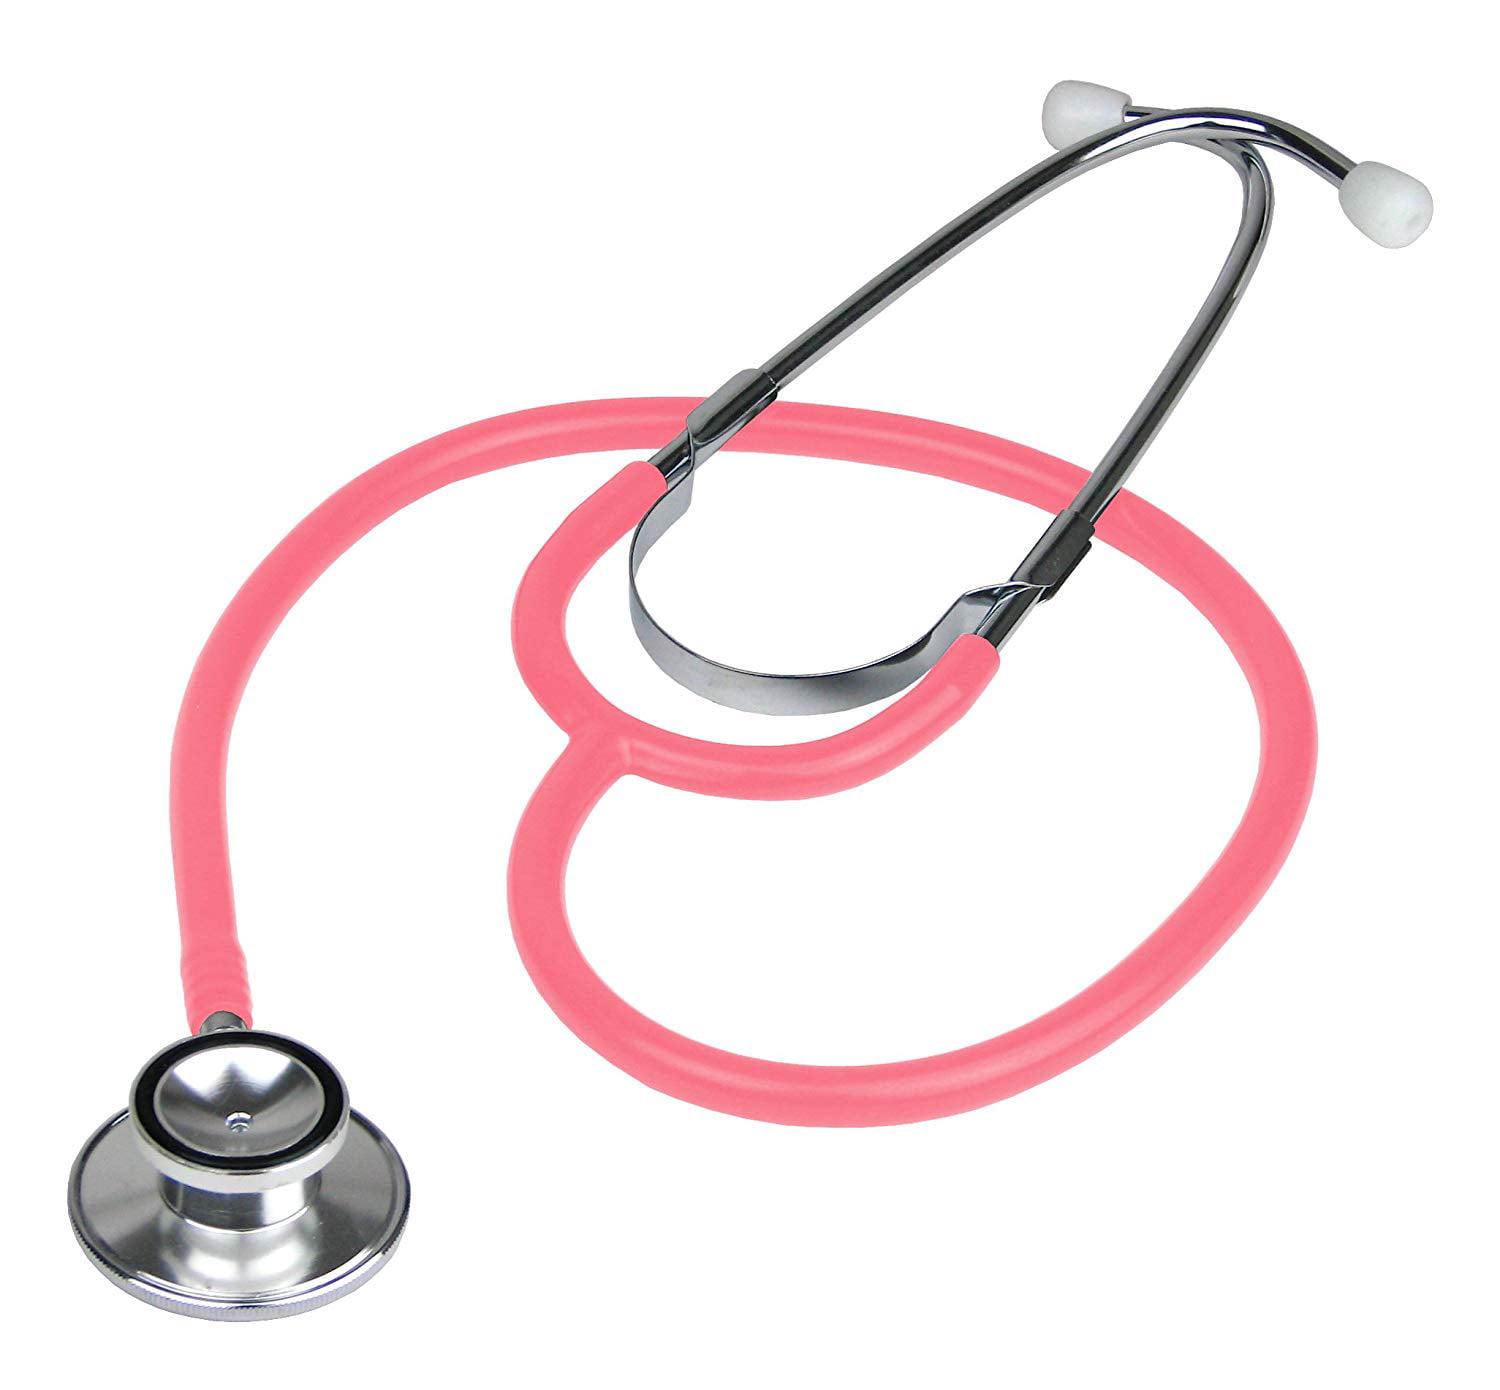 Everdixie Usa Dual Head Stethoscope Pink Pink By Bp Medical Supplies Walmart Com Walmart Com